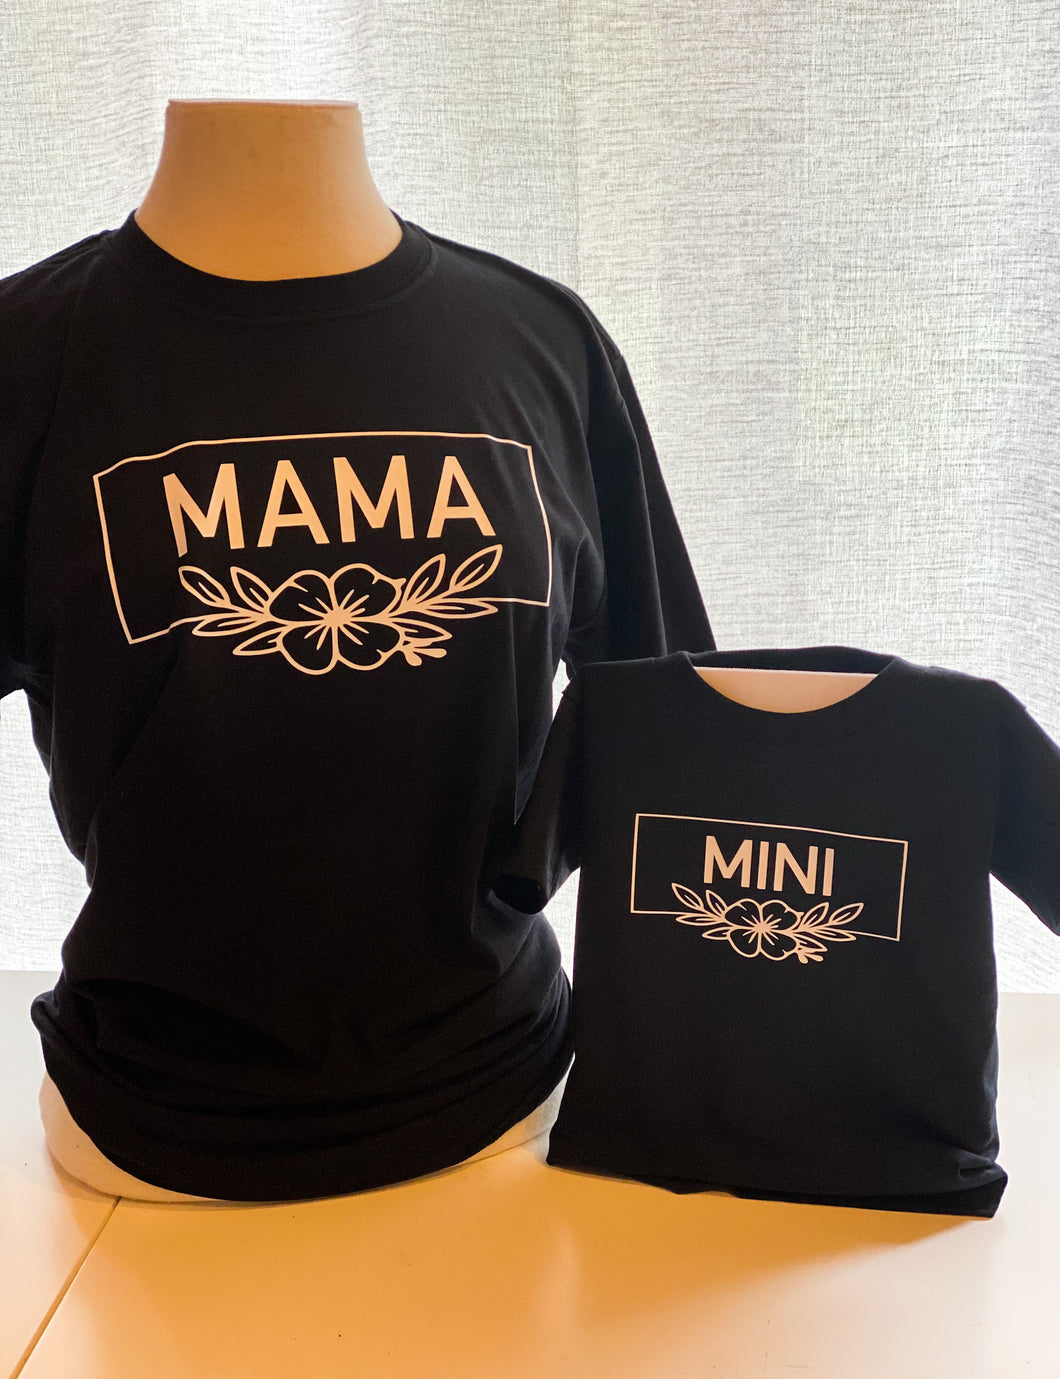 MAMA/MINI Shirt Set